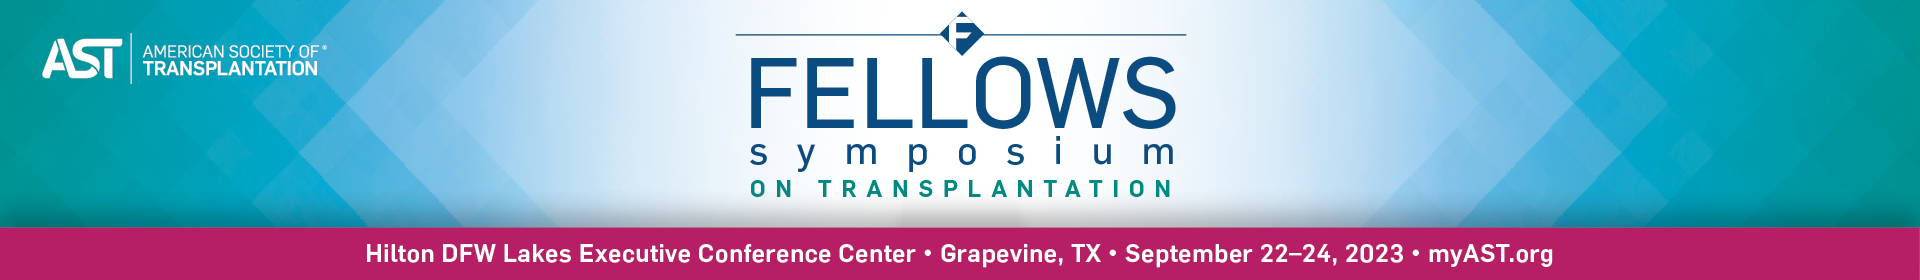 Fellows Symposium on Transplantation 2023